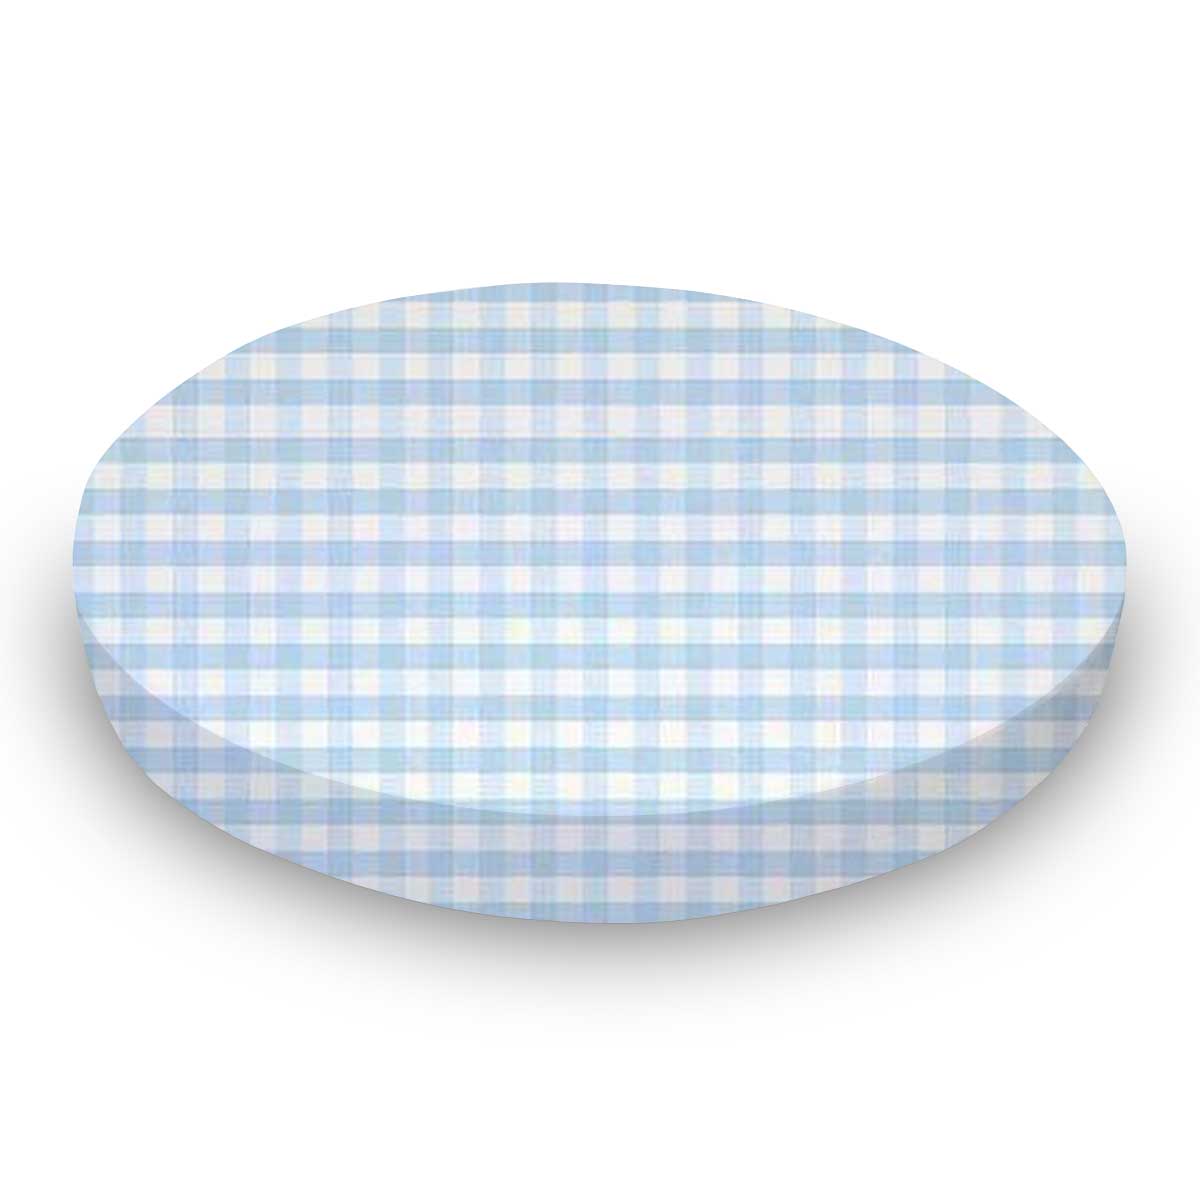 Oval Crib (Stokke Sleepi) - Blue Gingham Jersey Knit - Fitted  Oval